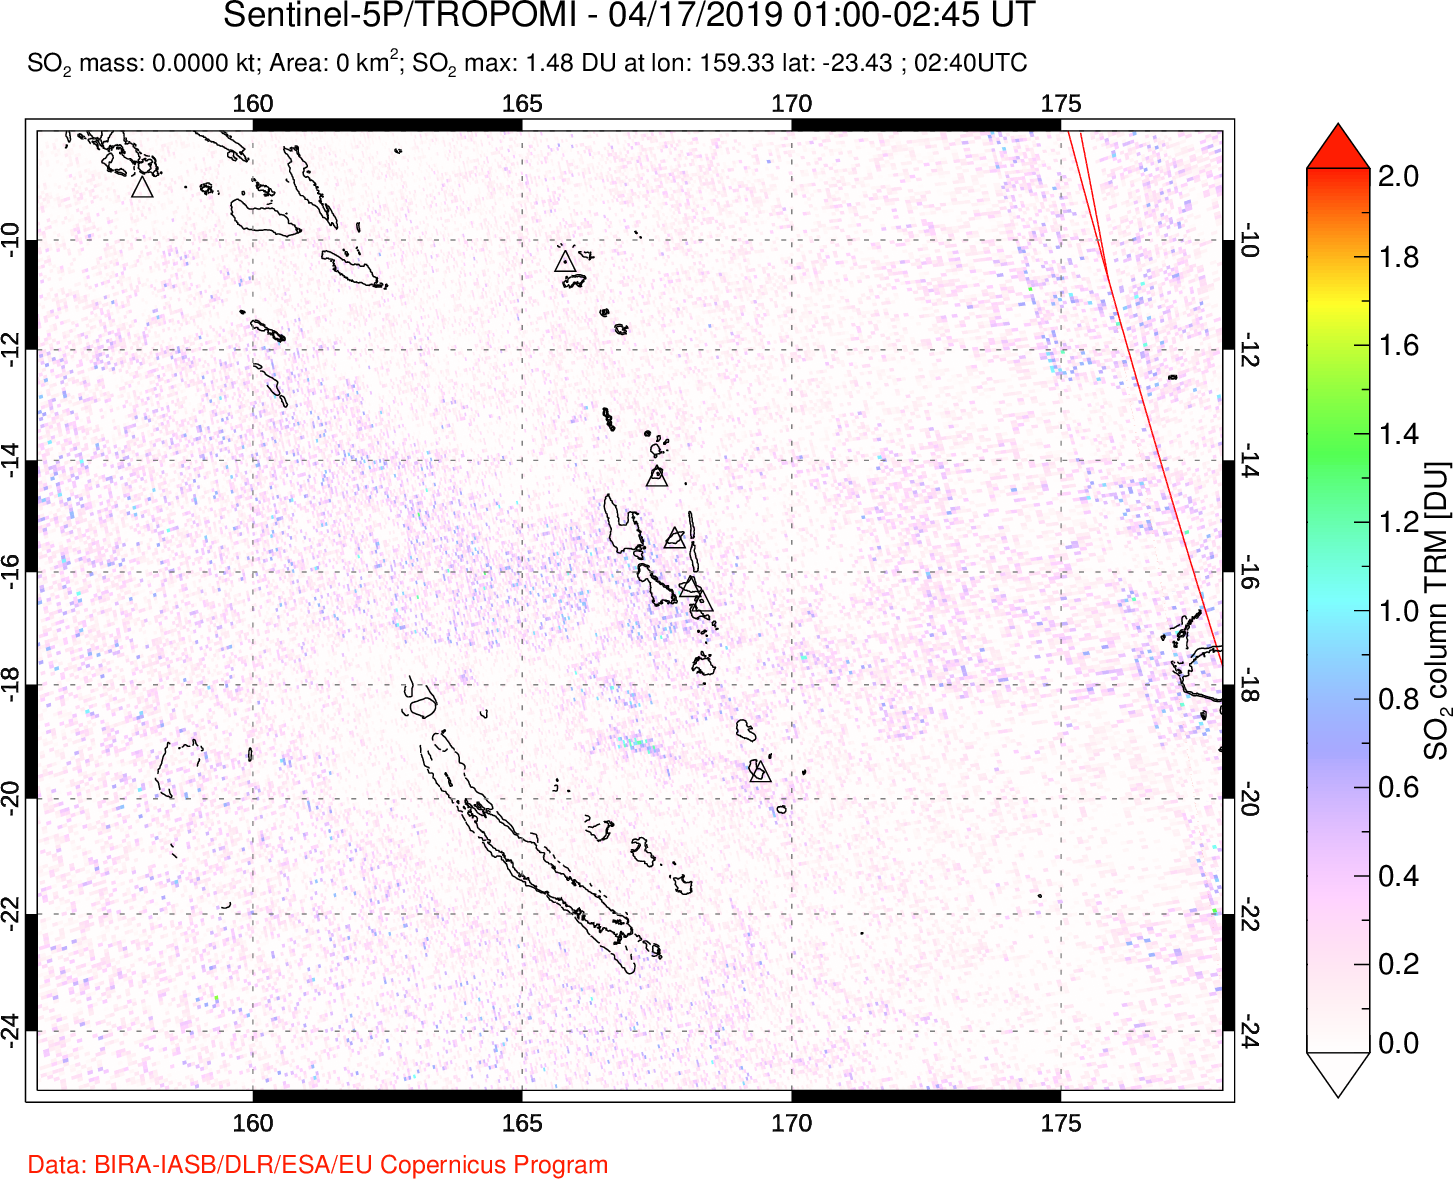 A sulfur dioxide image over Vanuatu, South Pacific on Apr 17, 2019.